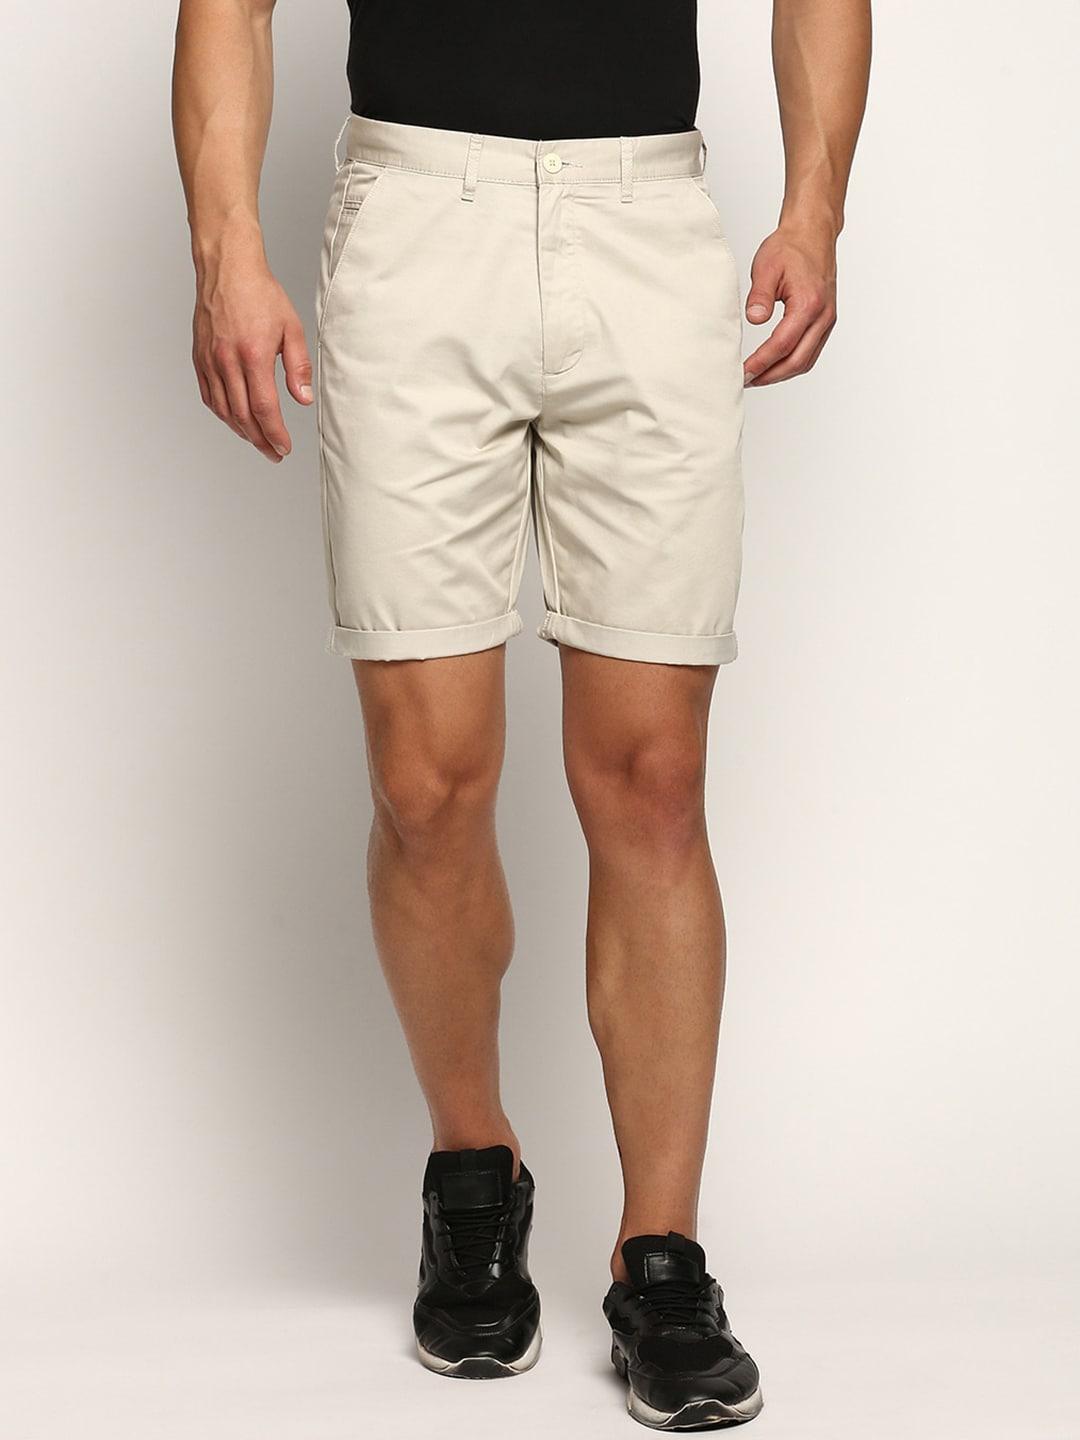 showoff-men-mid-rise-cotton-chinos-shorts